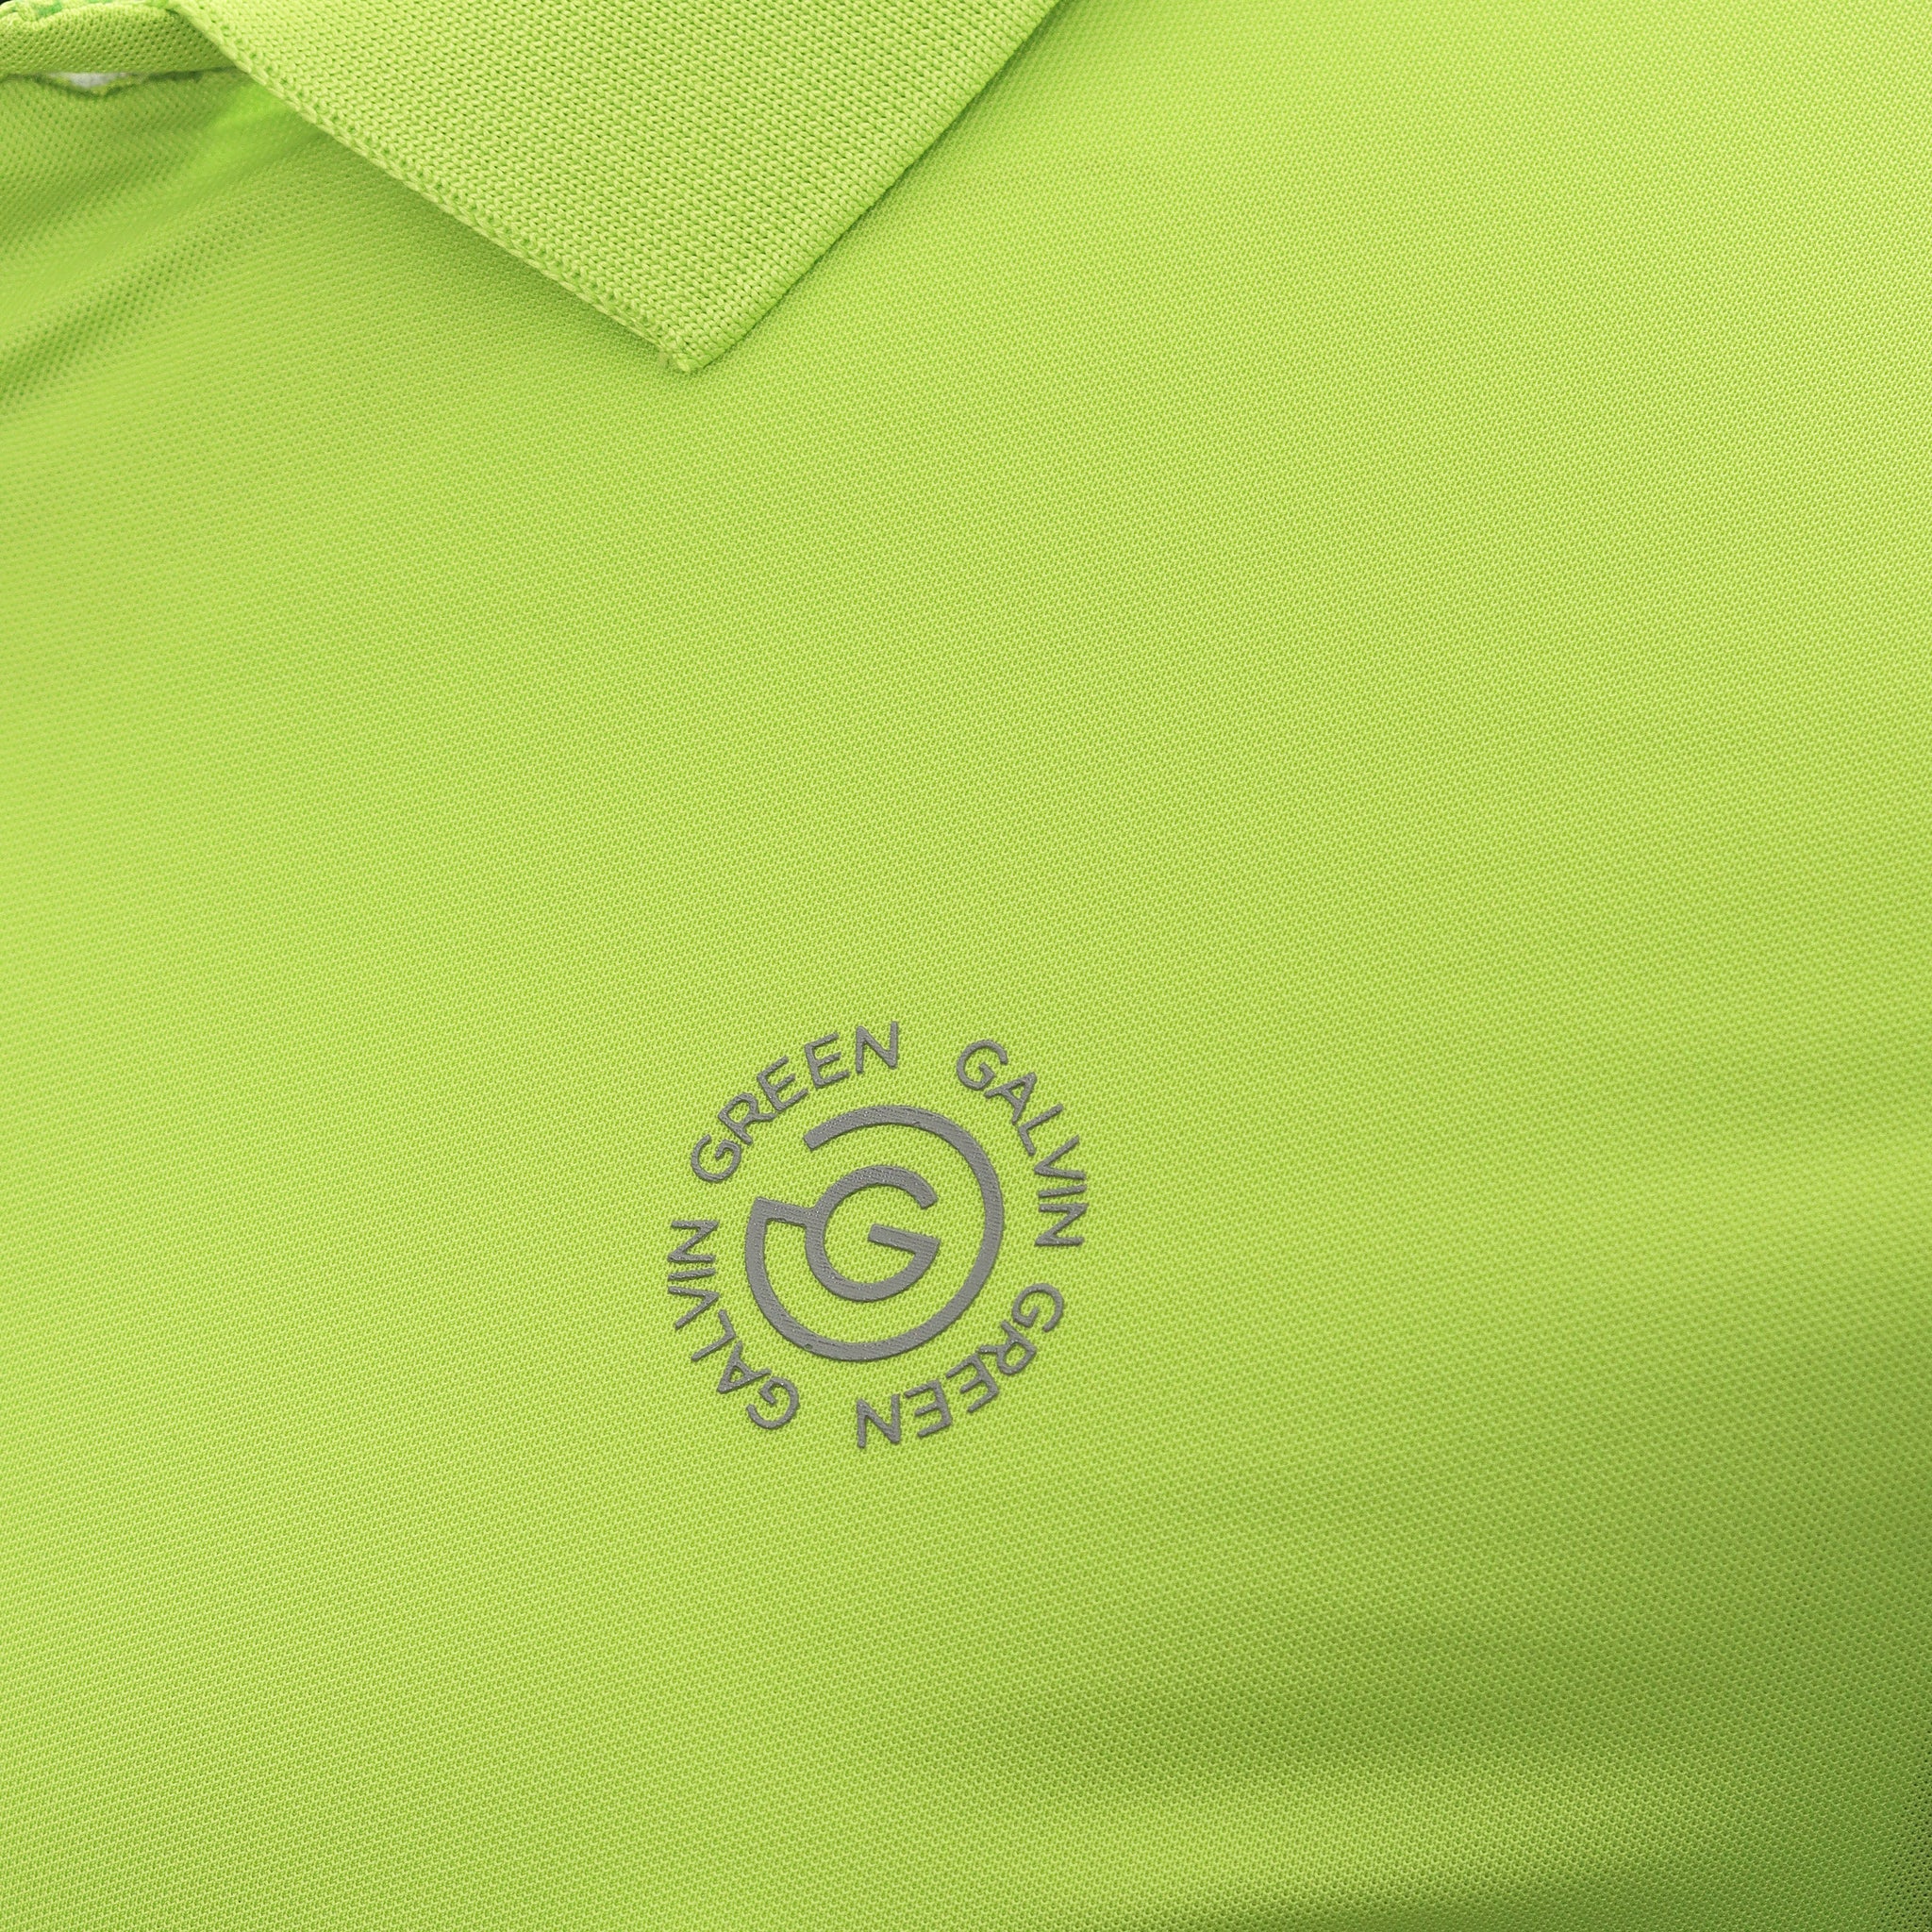 Galvin Green Max Tour Ventil8+ Golf Shirt